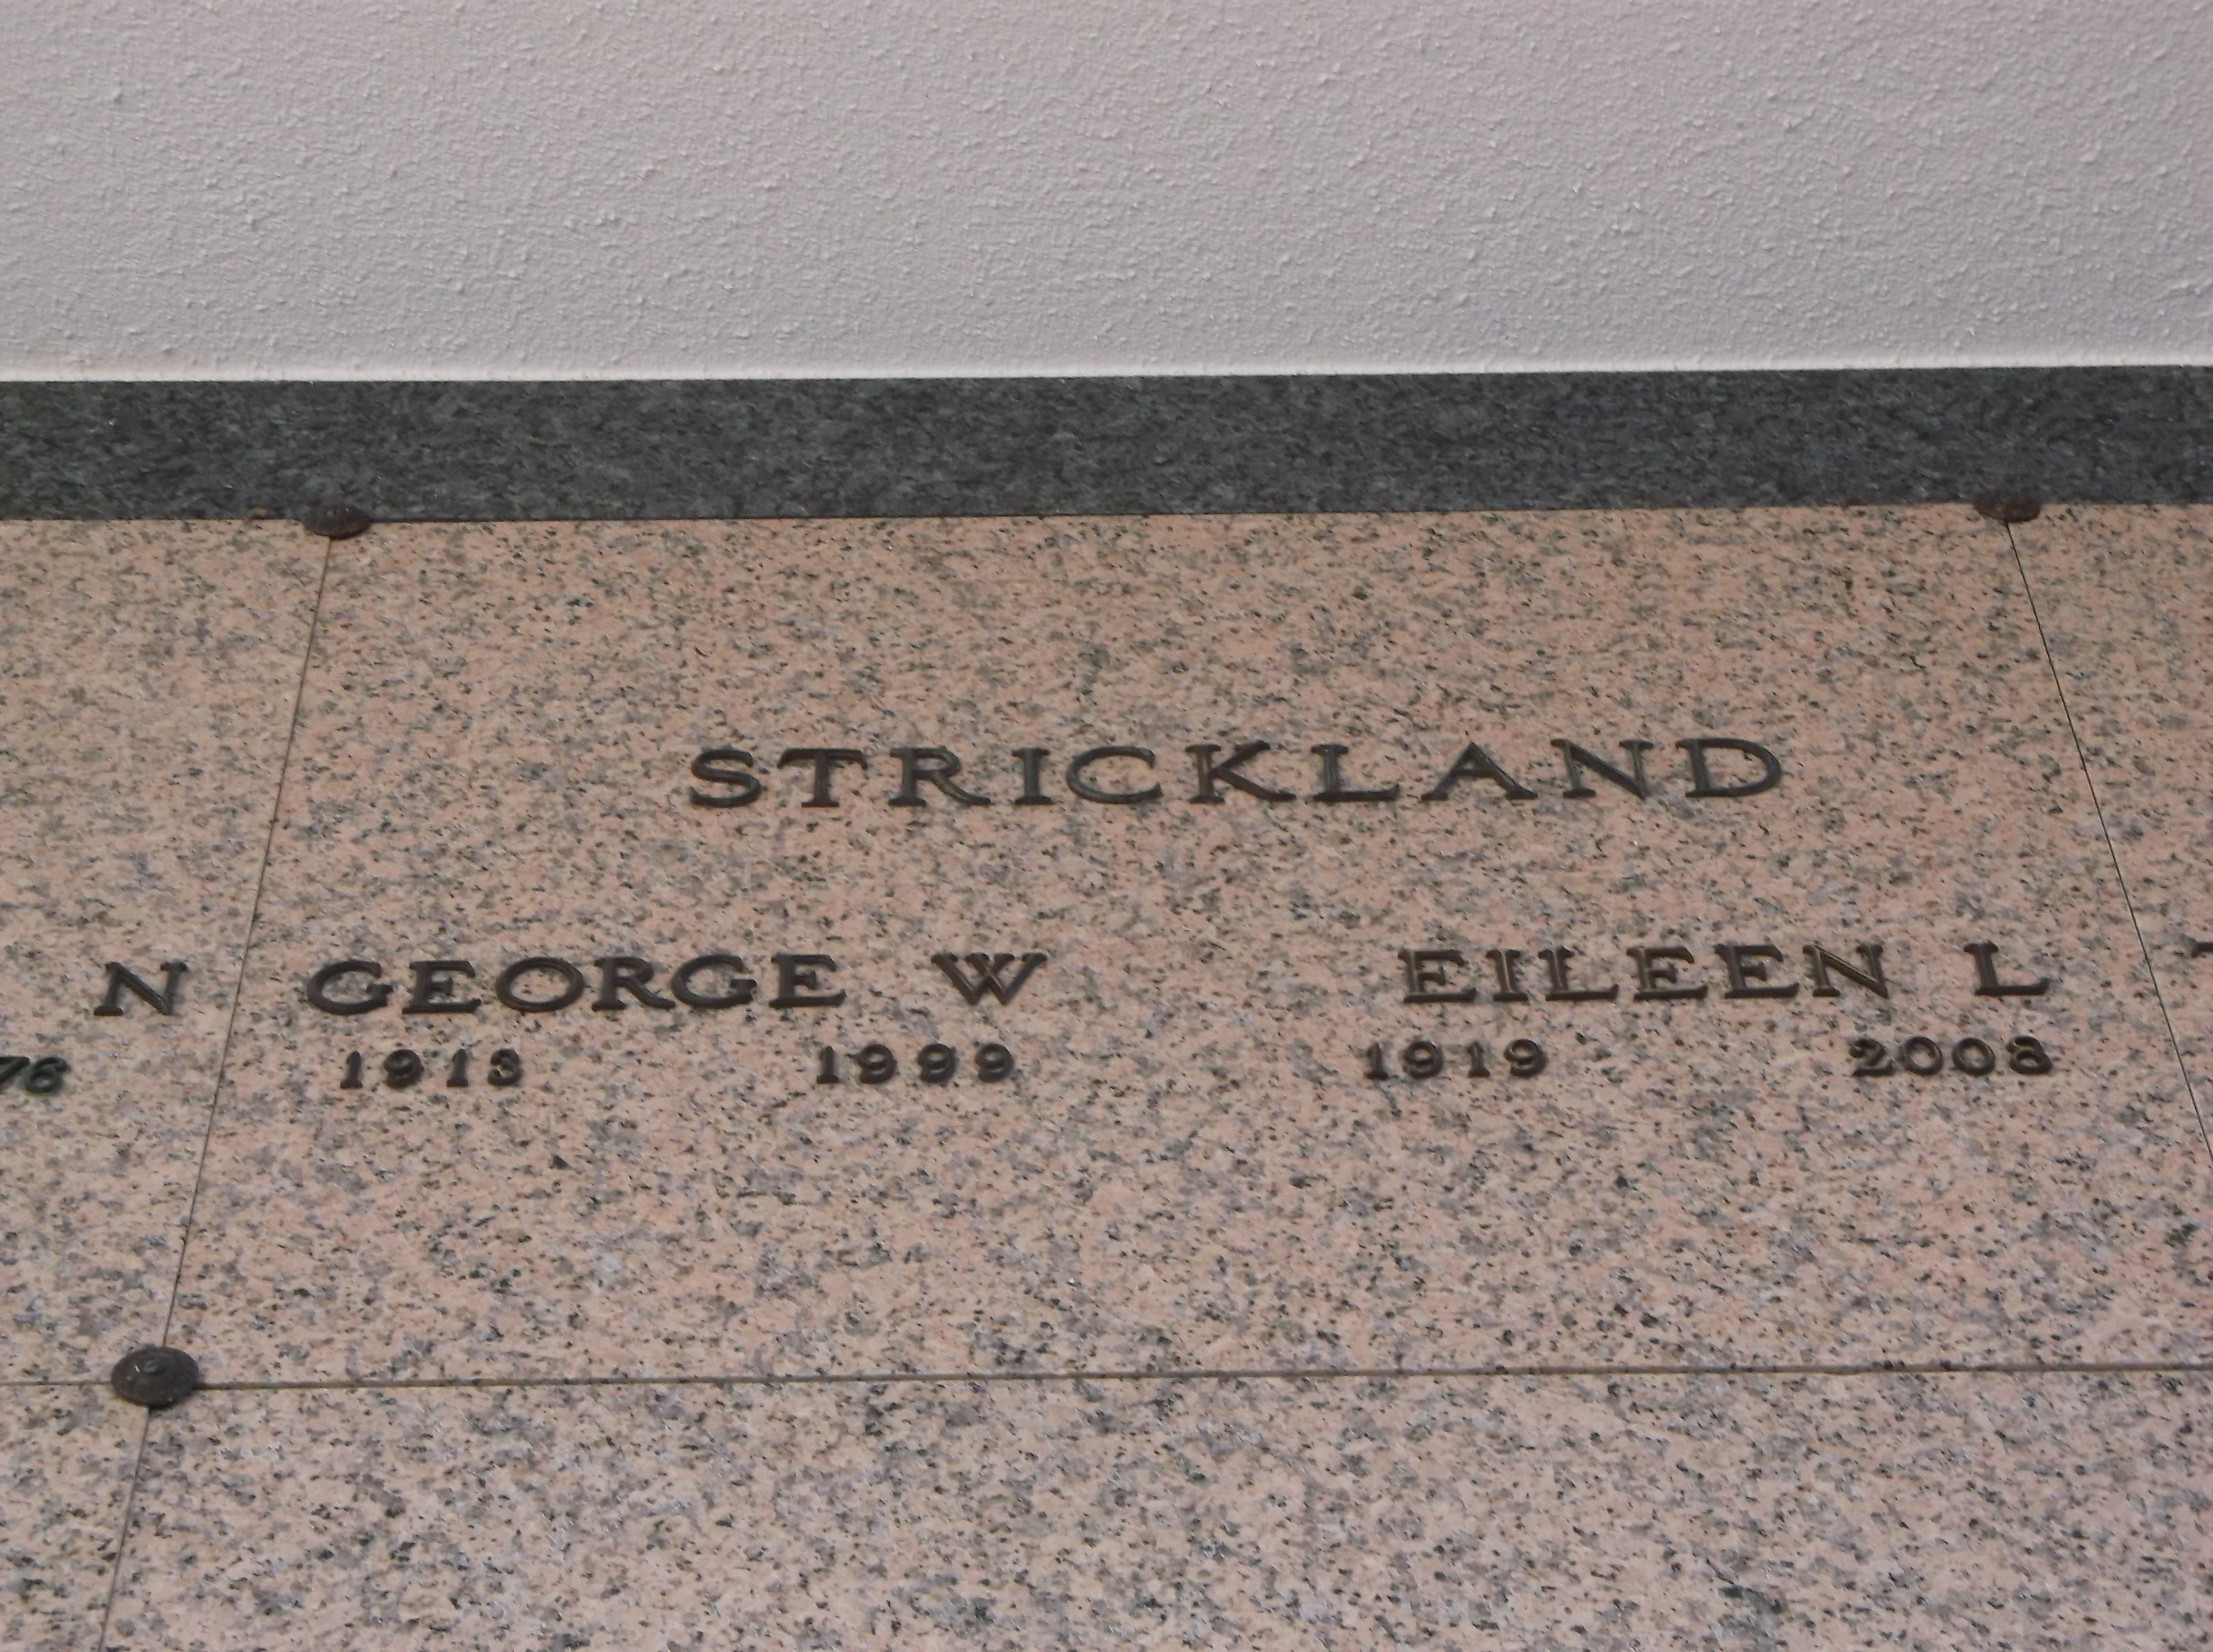 George W Strickland